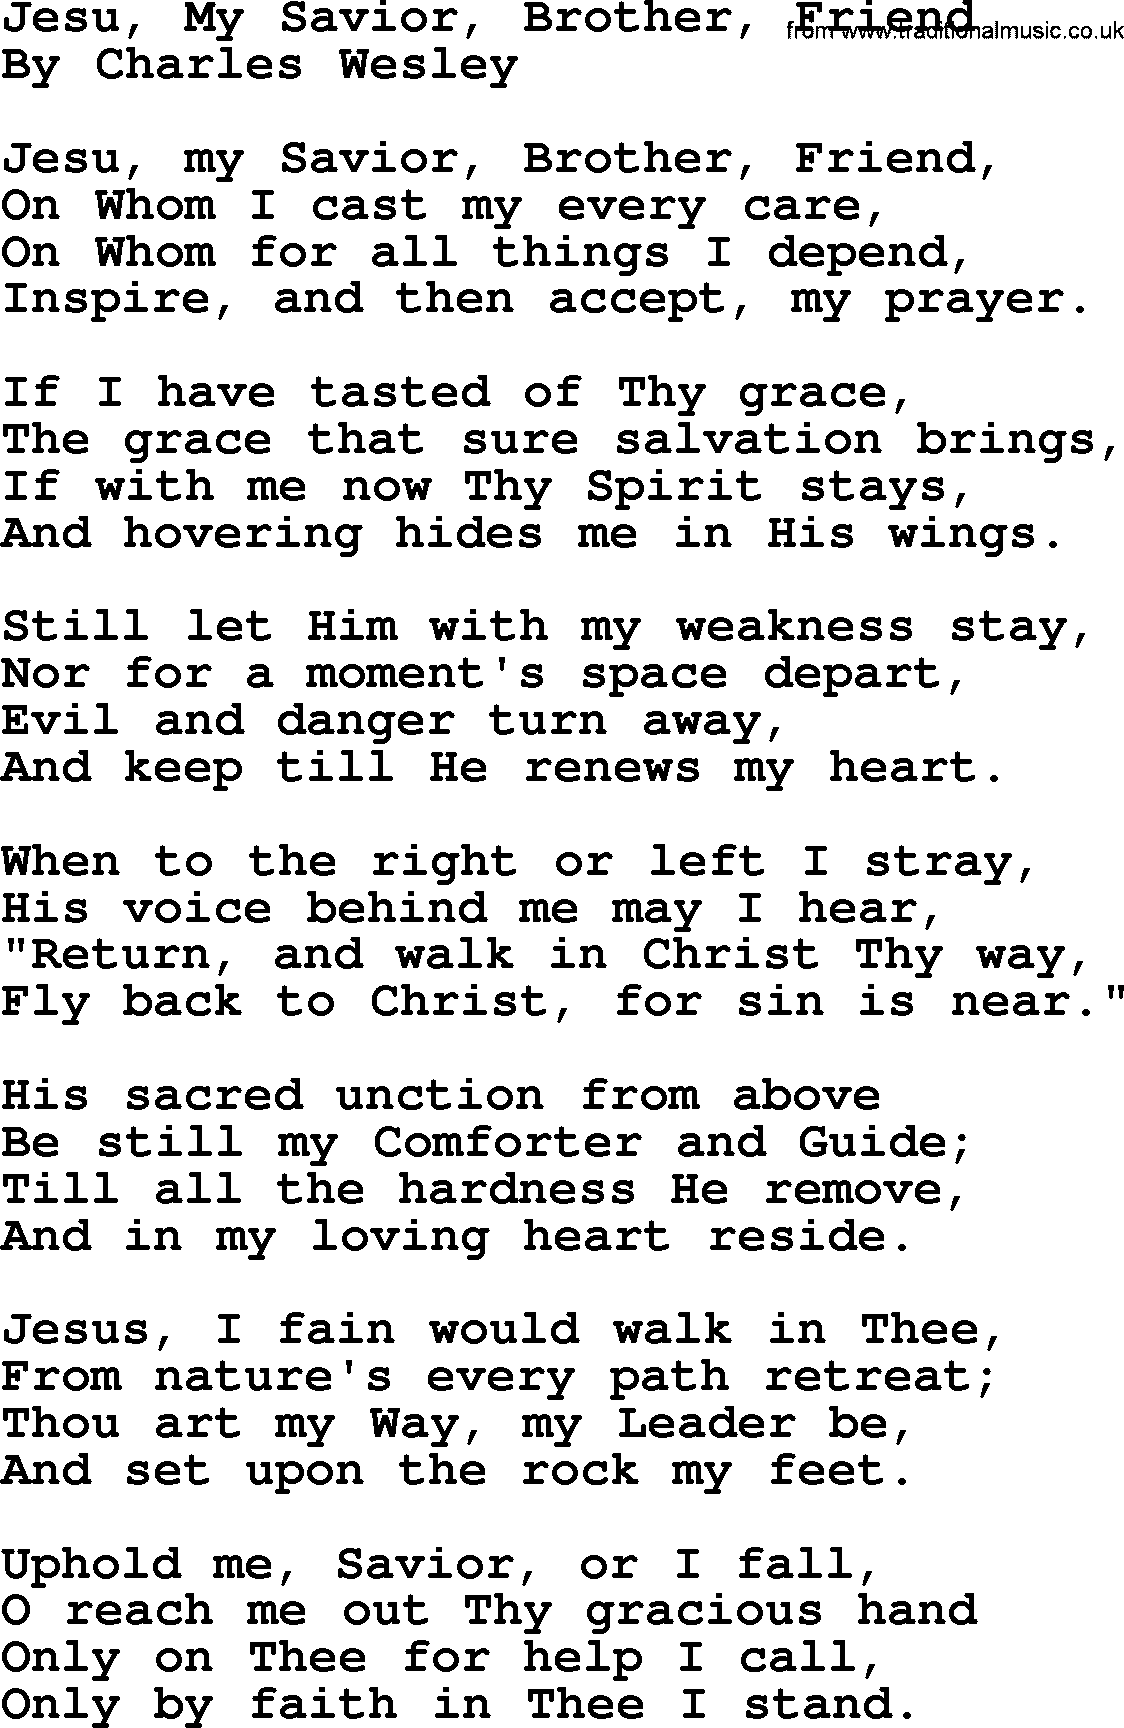 Charles Wesley hymn: Jesu, My Savior, Brother, Friend, lyrics